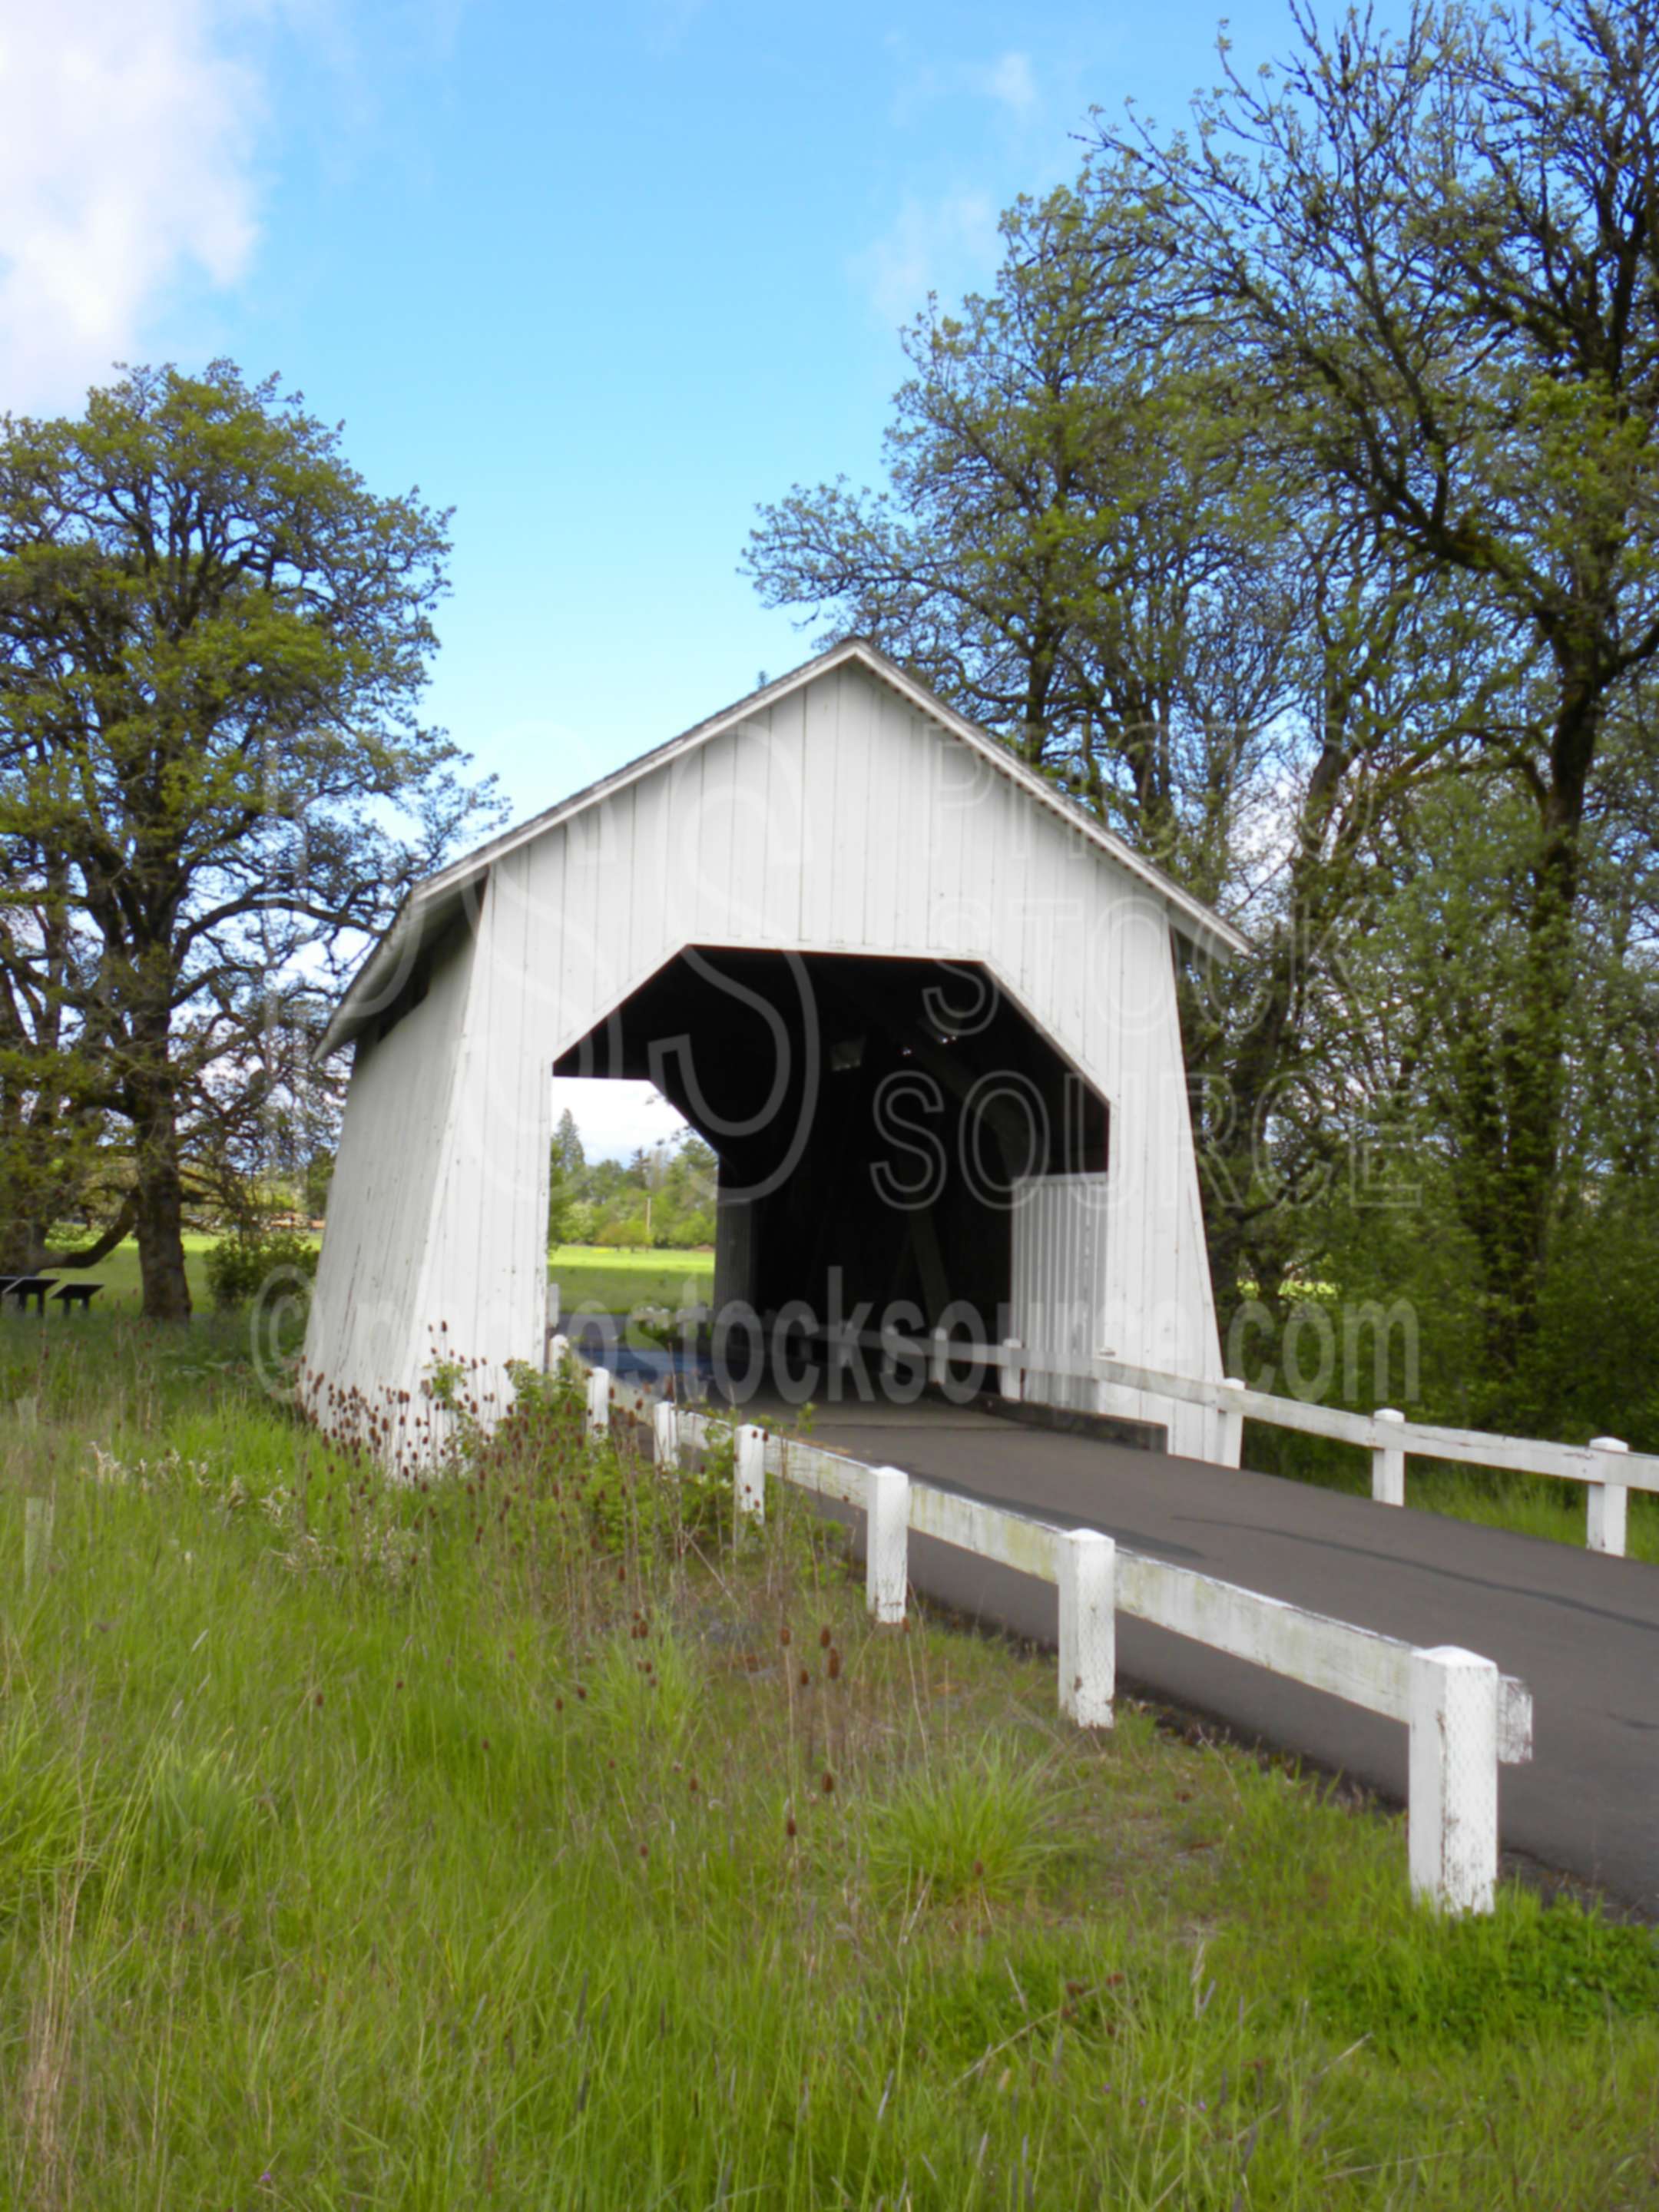 Irish Bend Bridge,bridge,covered,wooden,road,roof,crossing,americana